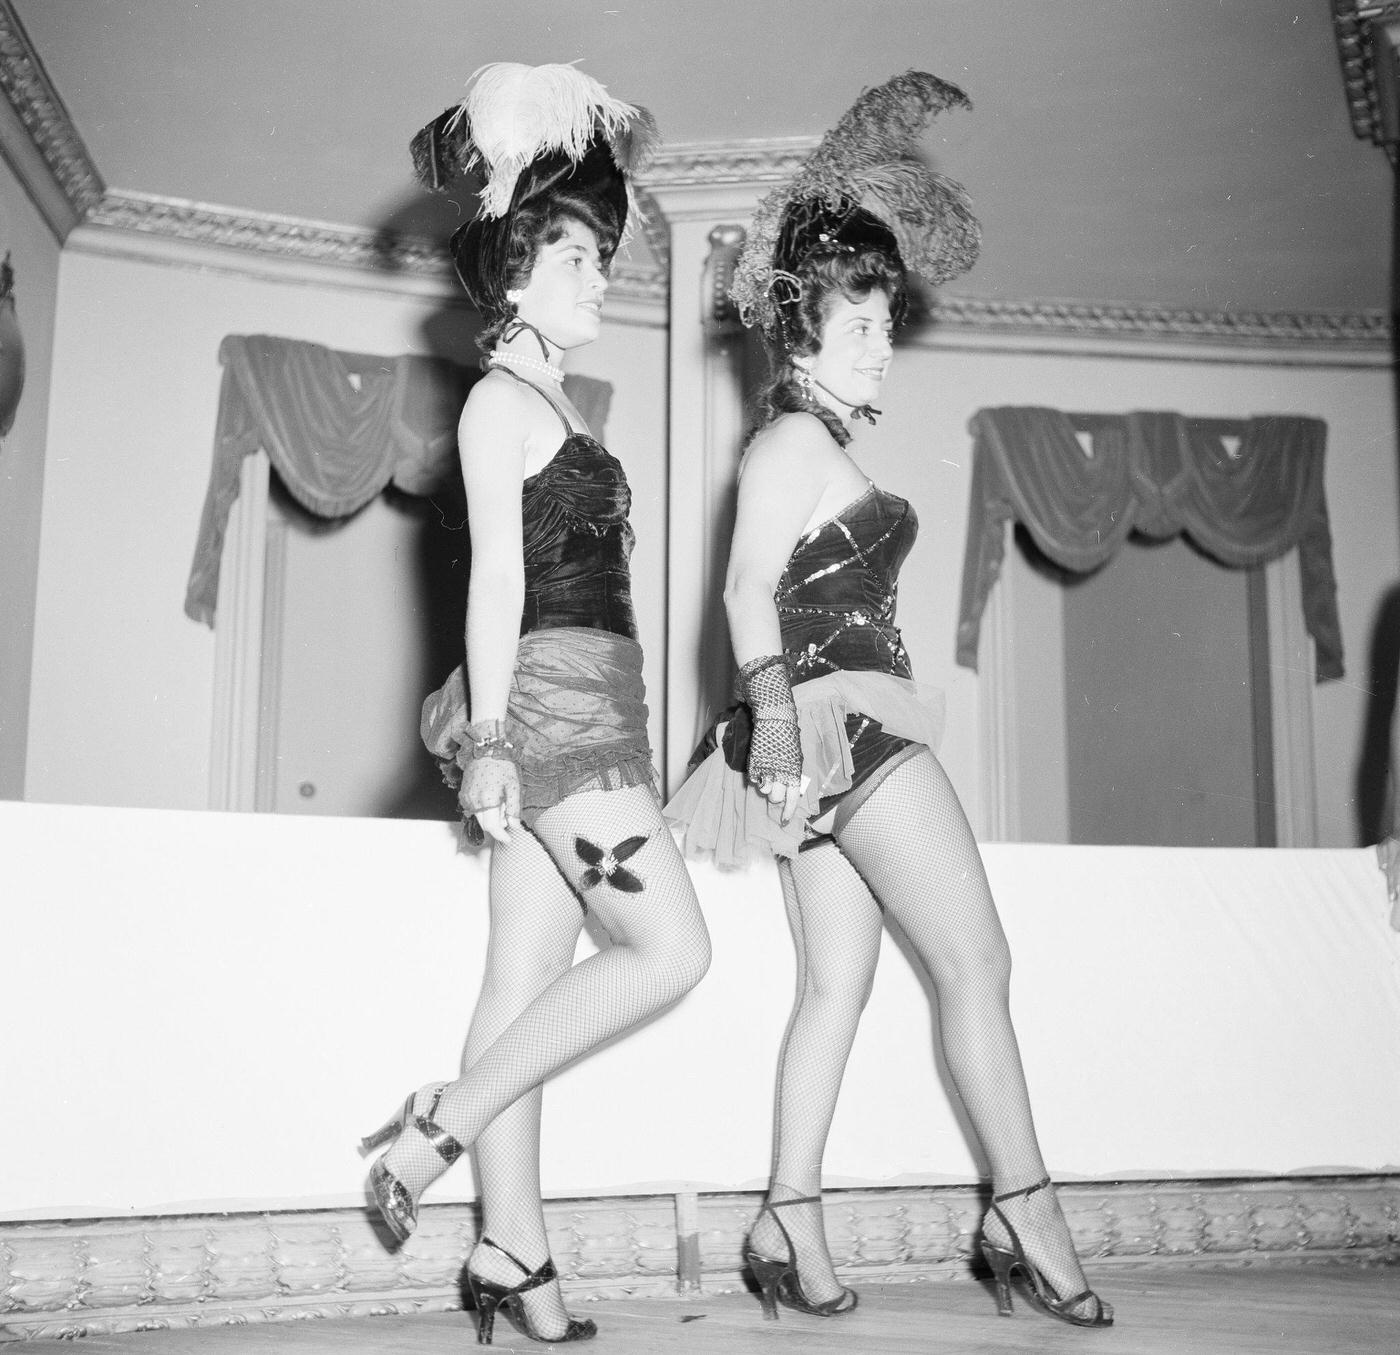 Costumed Partygoers Dancing, Carnival in Rio 1953